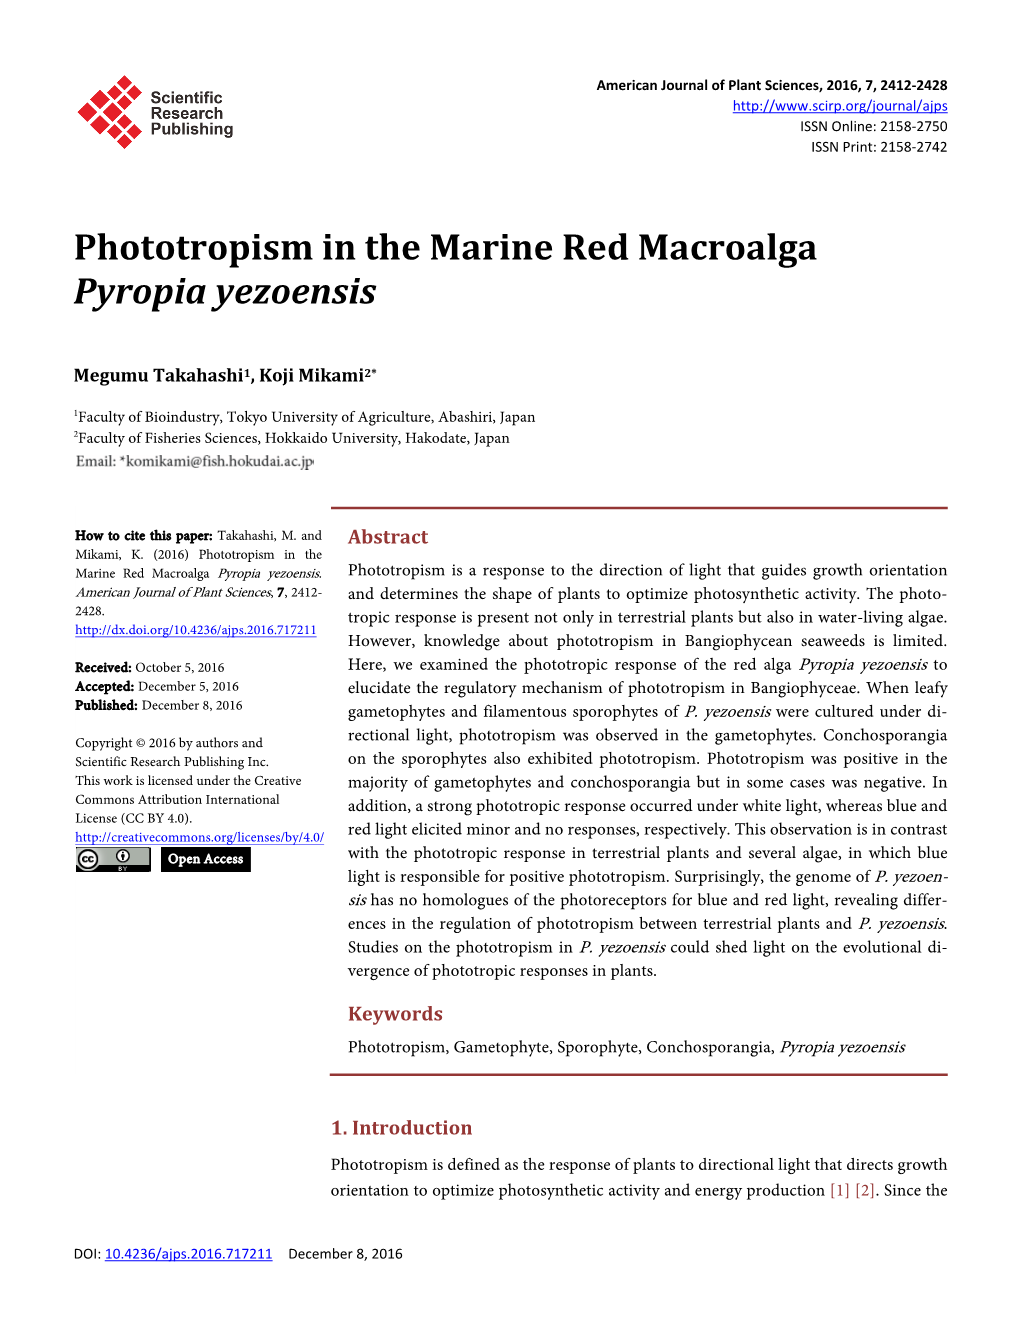 Phototropism in the Marine Red Macroalga Pyropia Yezoensis